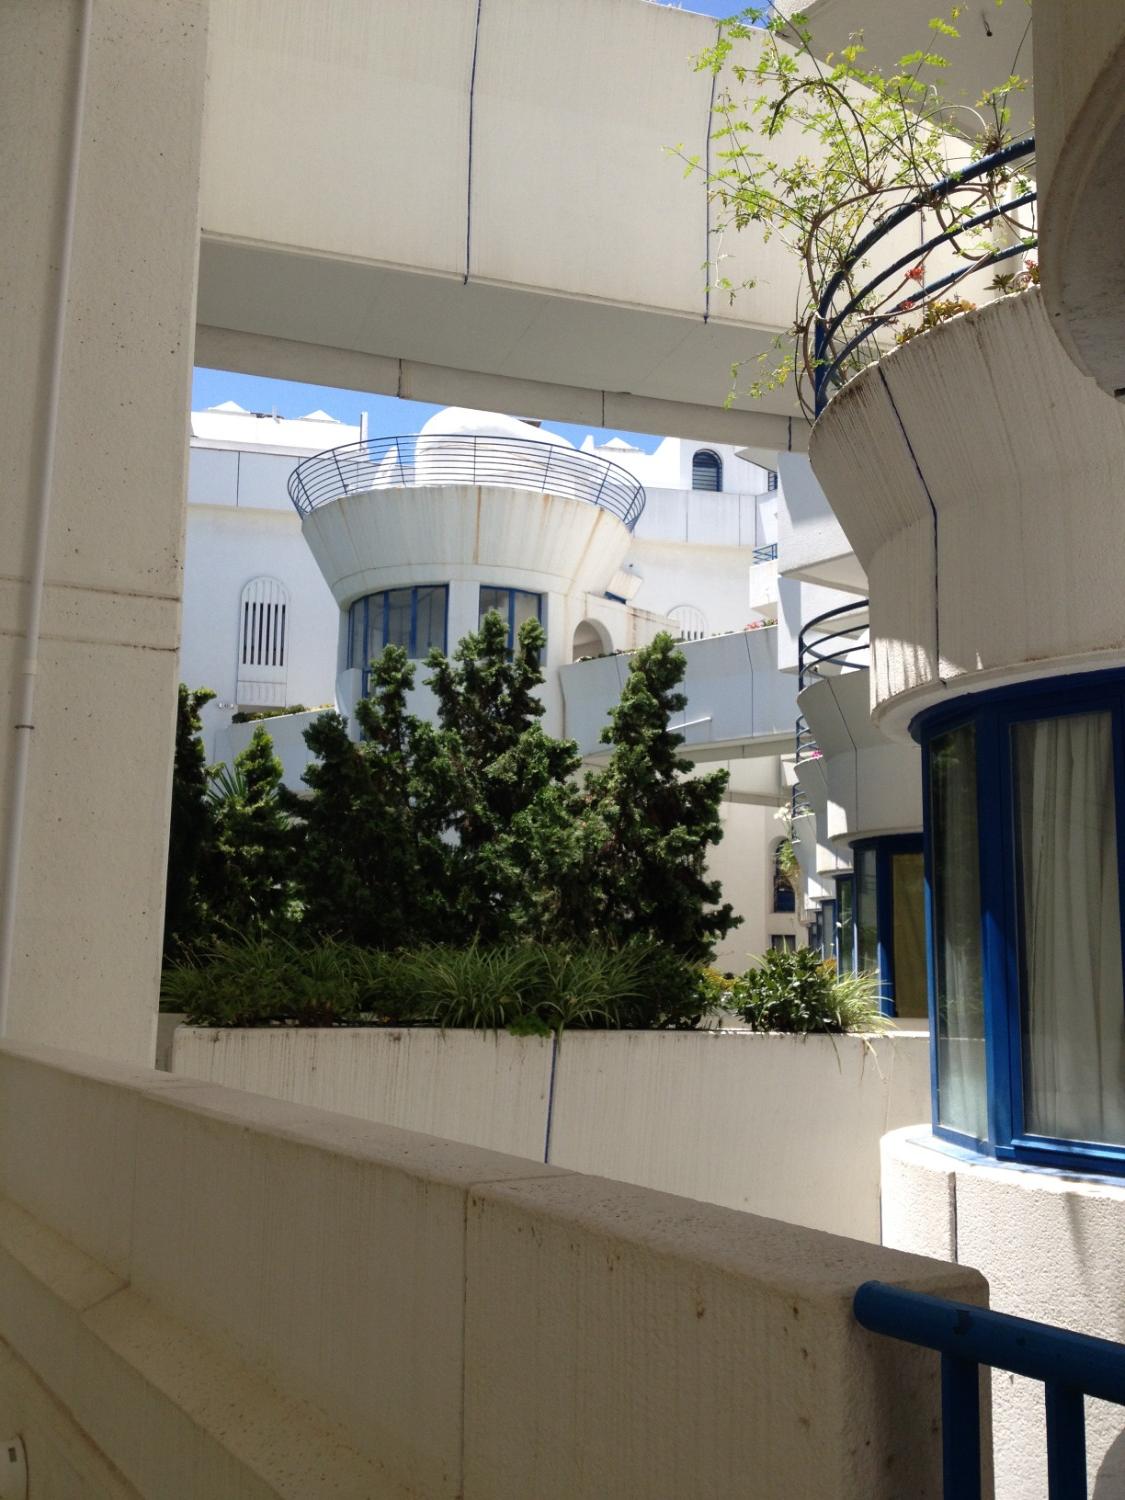 Duplex i andre etasje. Andre linje av stranden, Marbella City